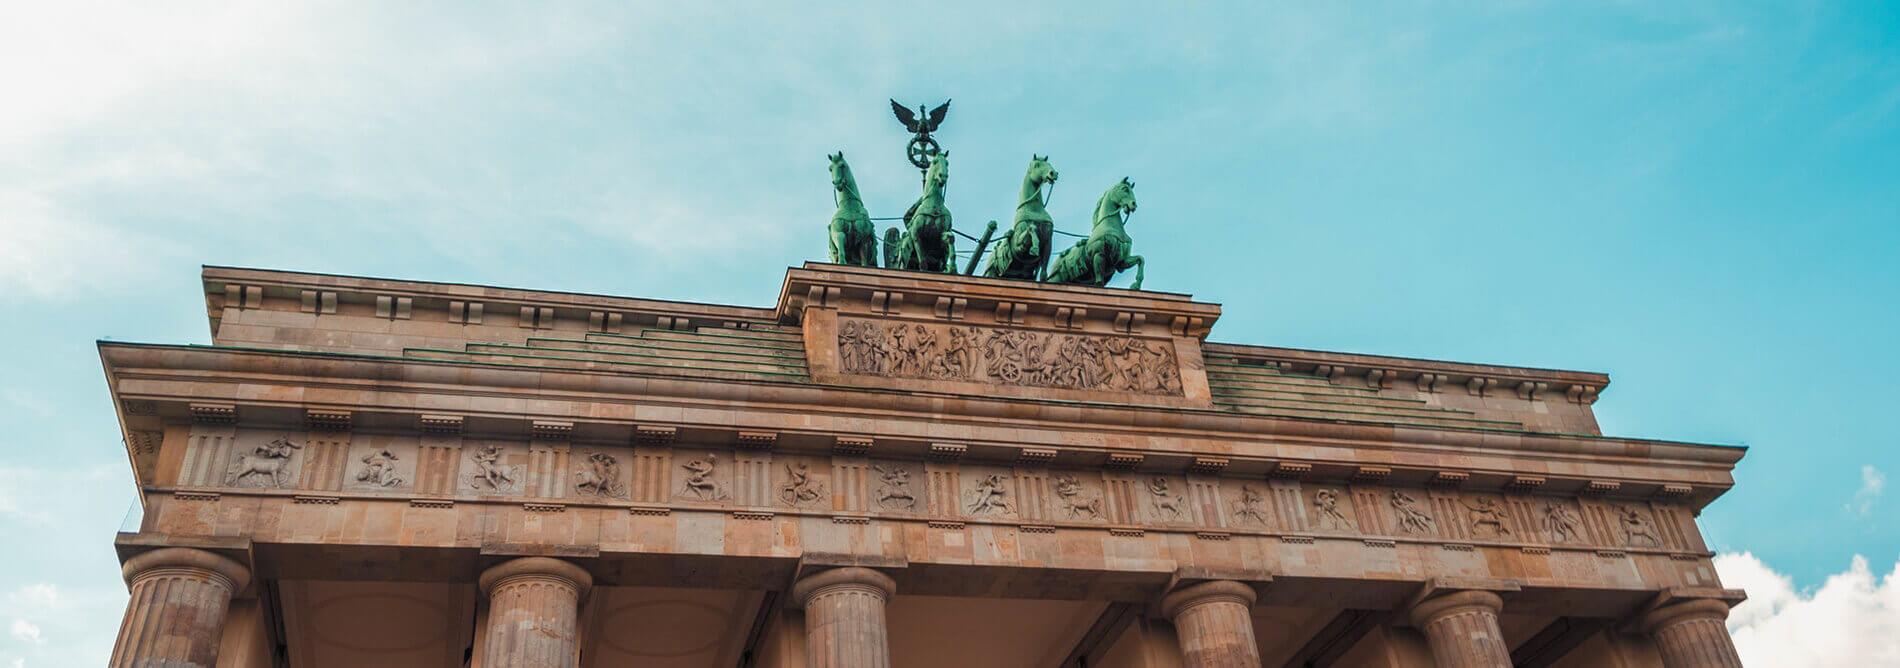 Free-tour-Berlin-5